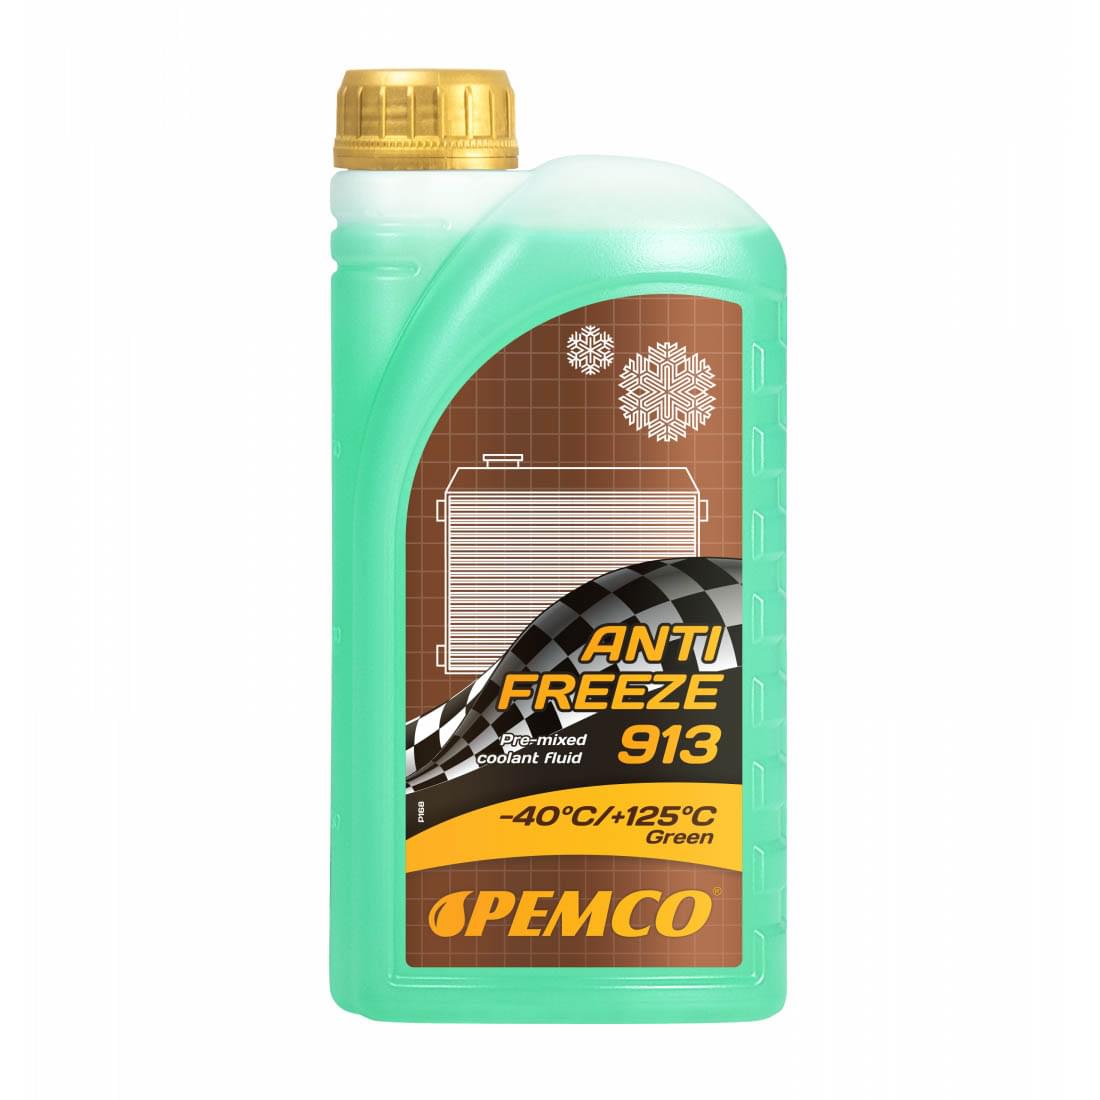 PEMCO Antifreeze 913 (-40°C) ΠΡΑΣΙΝΟ 1L